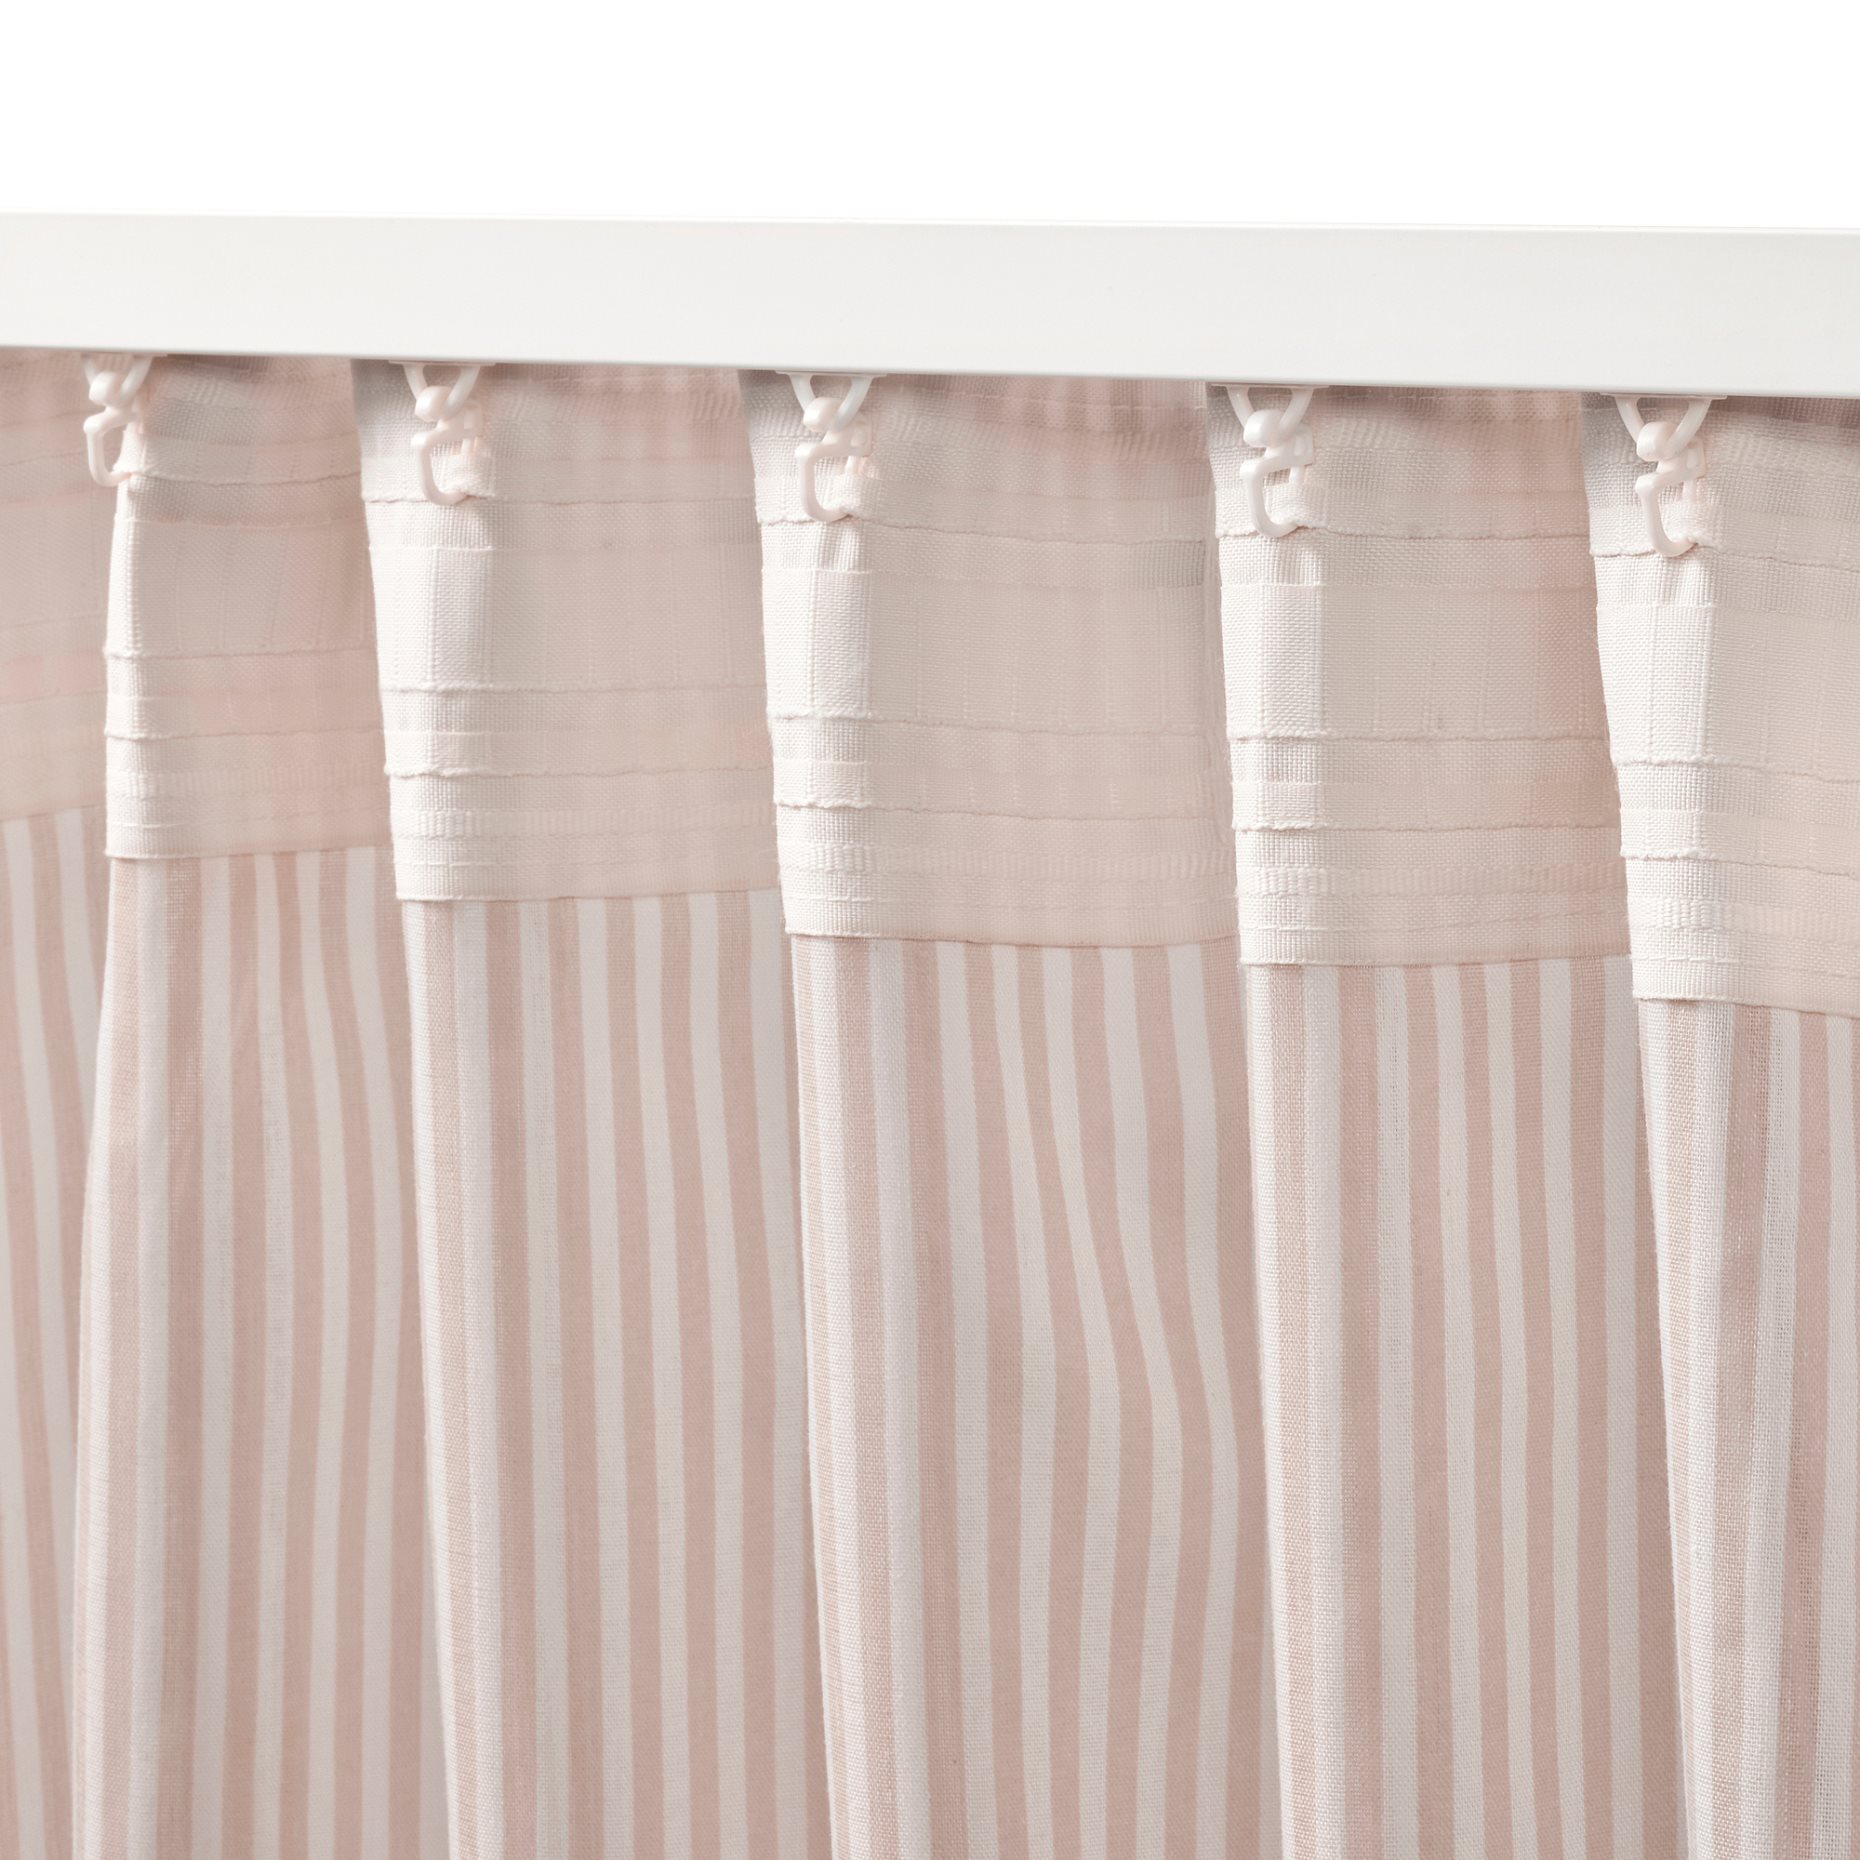 BYMOTT, curtains 120x300 cm, 1 pair, 805.099.71